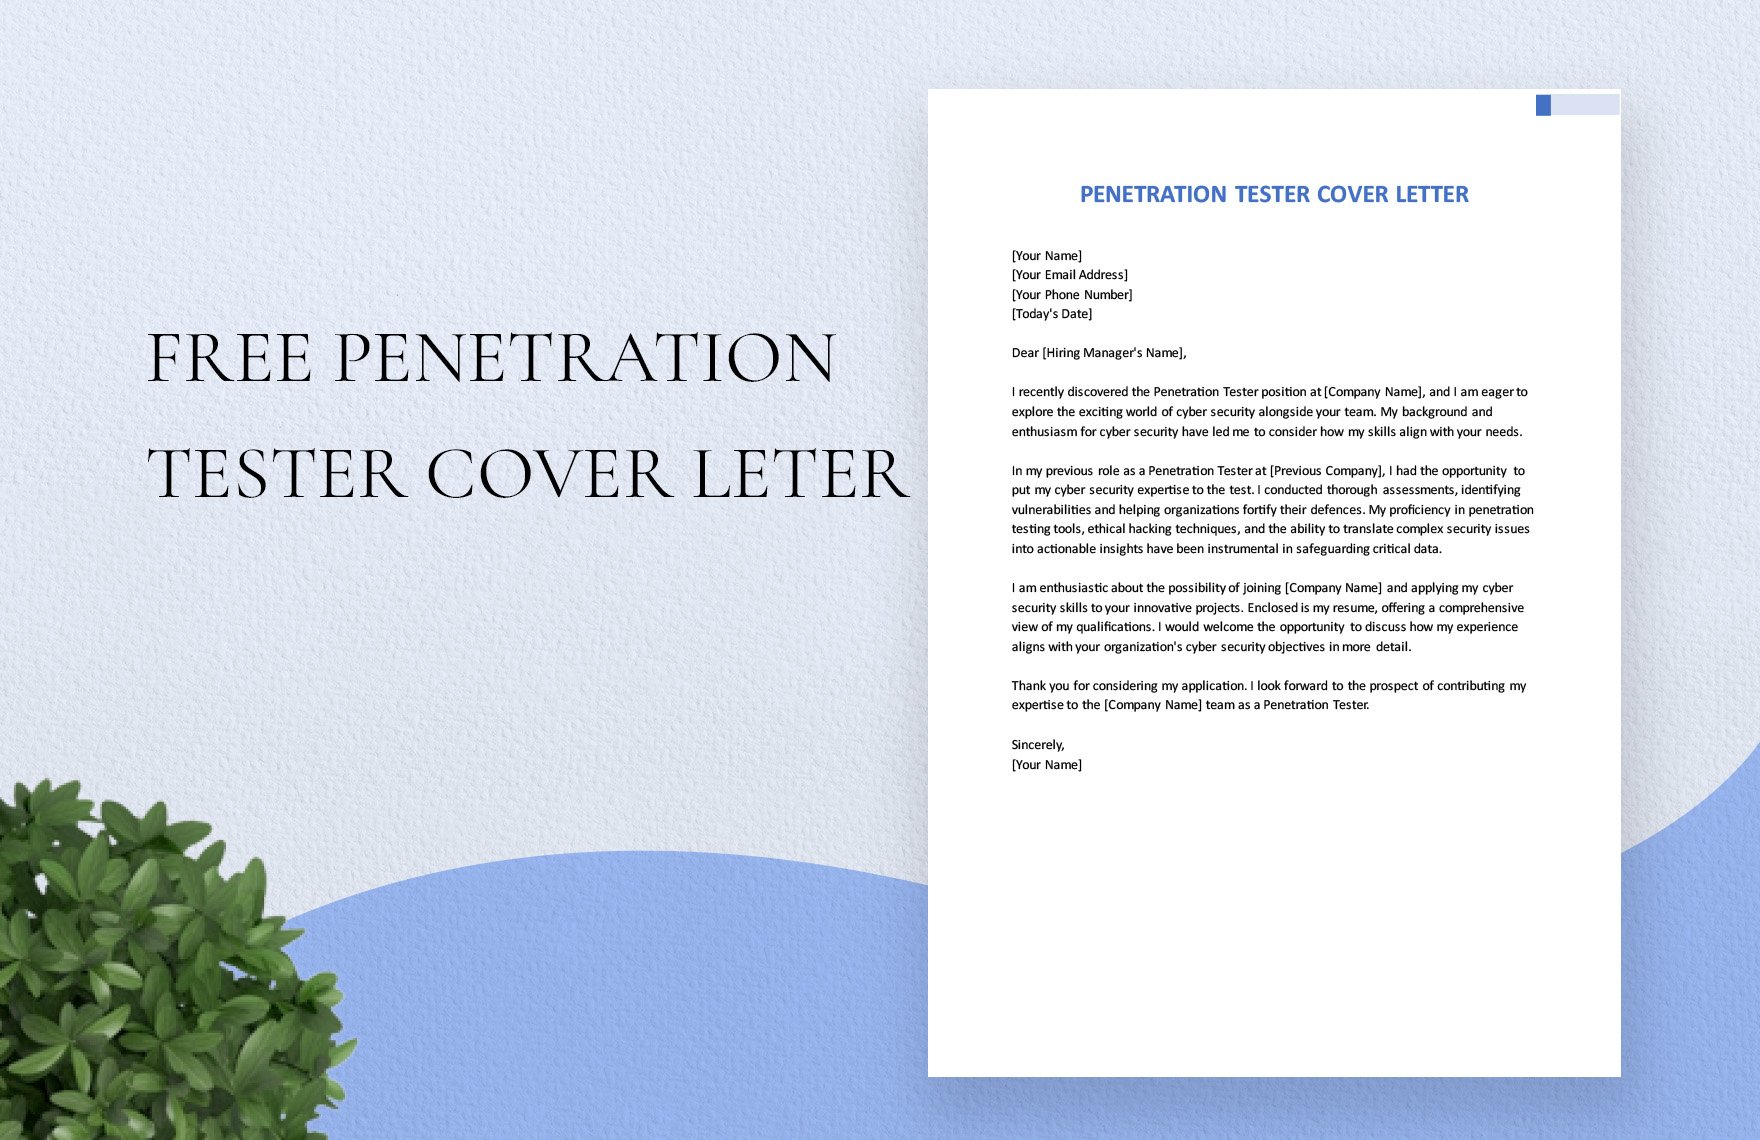 Penetration Tester Cover Letter in Word, Google Docs, PDF